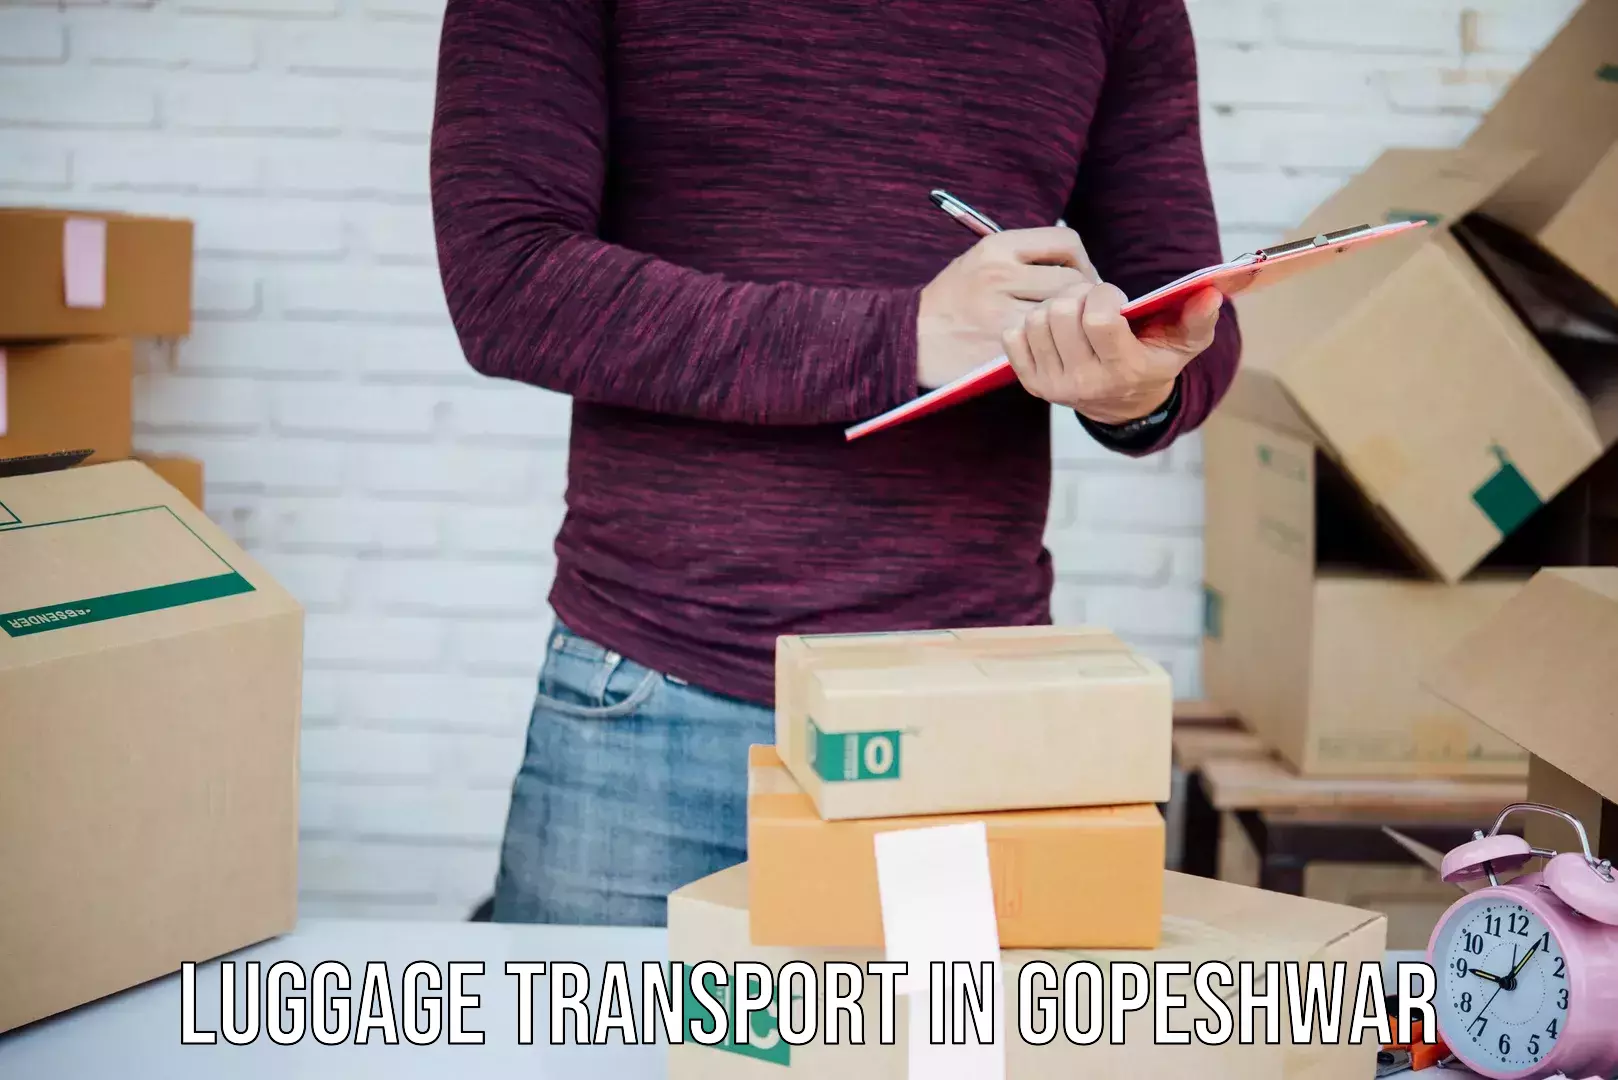 Luggage shipment processing in Gopeshwar